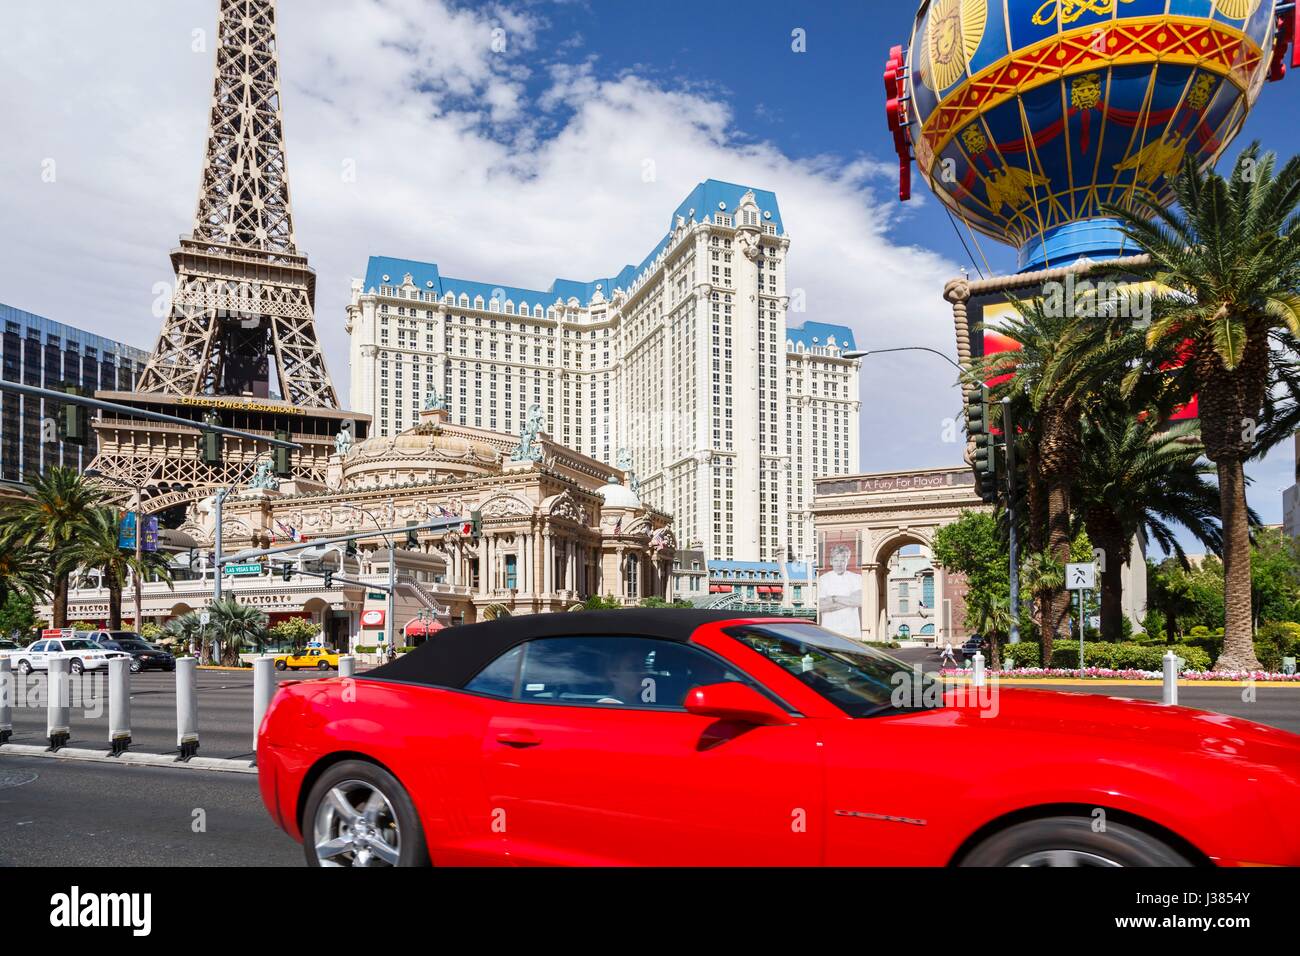 A red convertible rental car drives by Paris Las Vegas Hotel on Las Vegas Boulevard Stock Photo